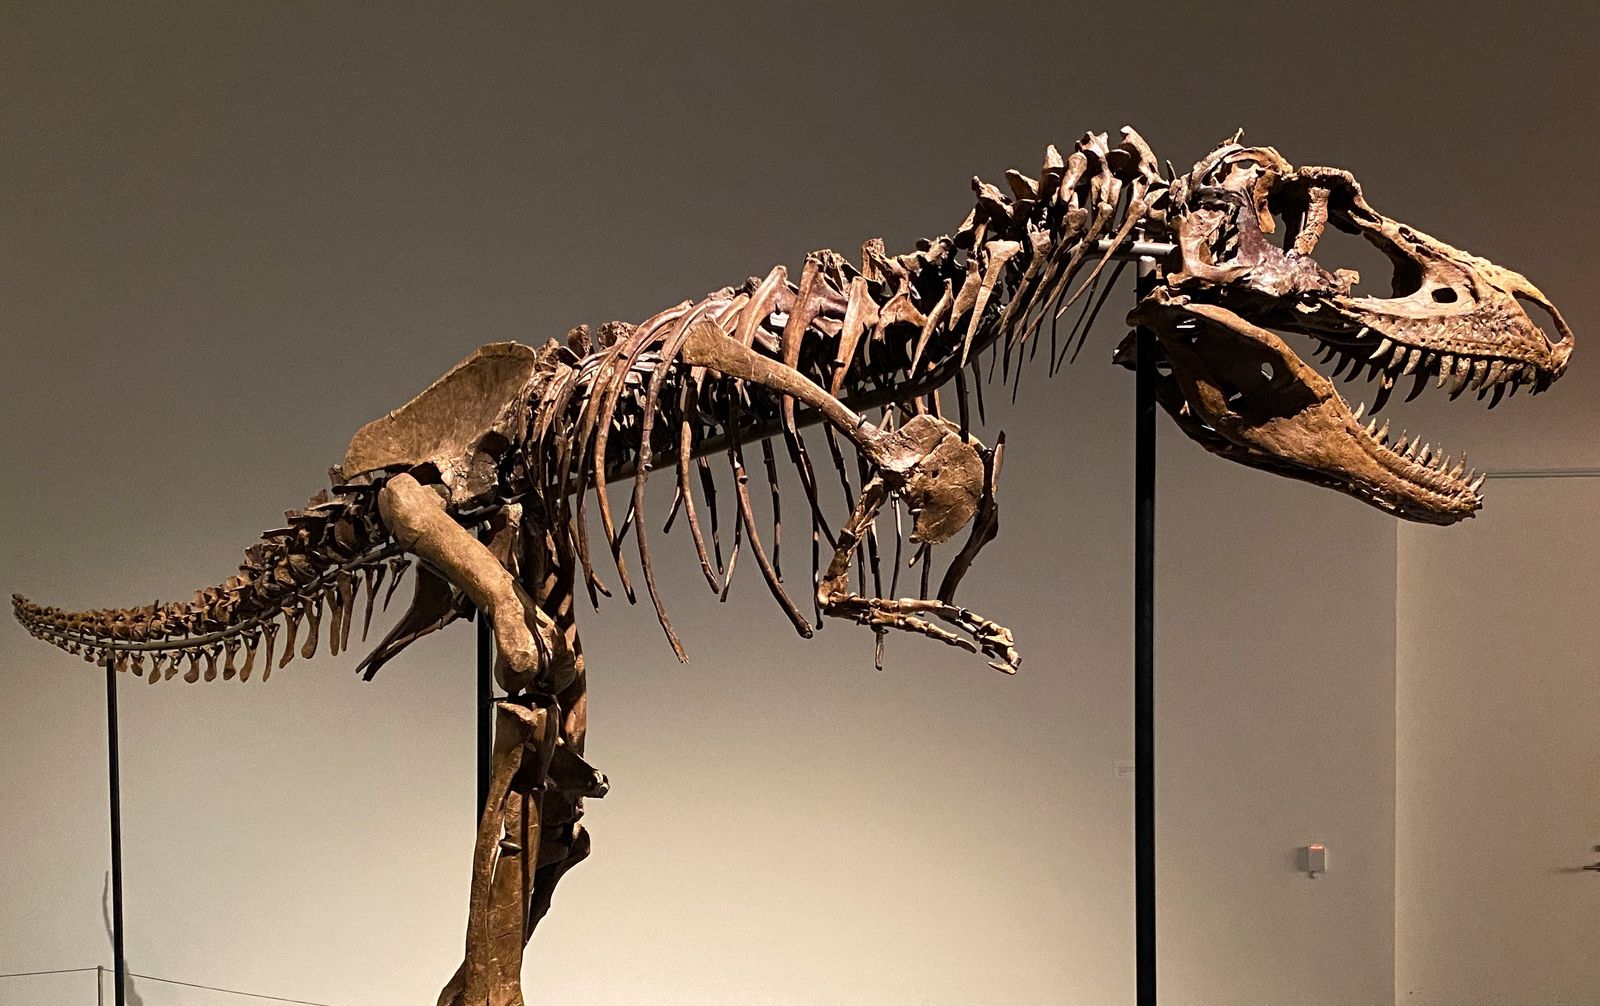 هيكل عظمي تم اكتشافه مؤخراً لديناصور من نوع غورغوصور قبل مزاد 